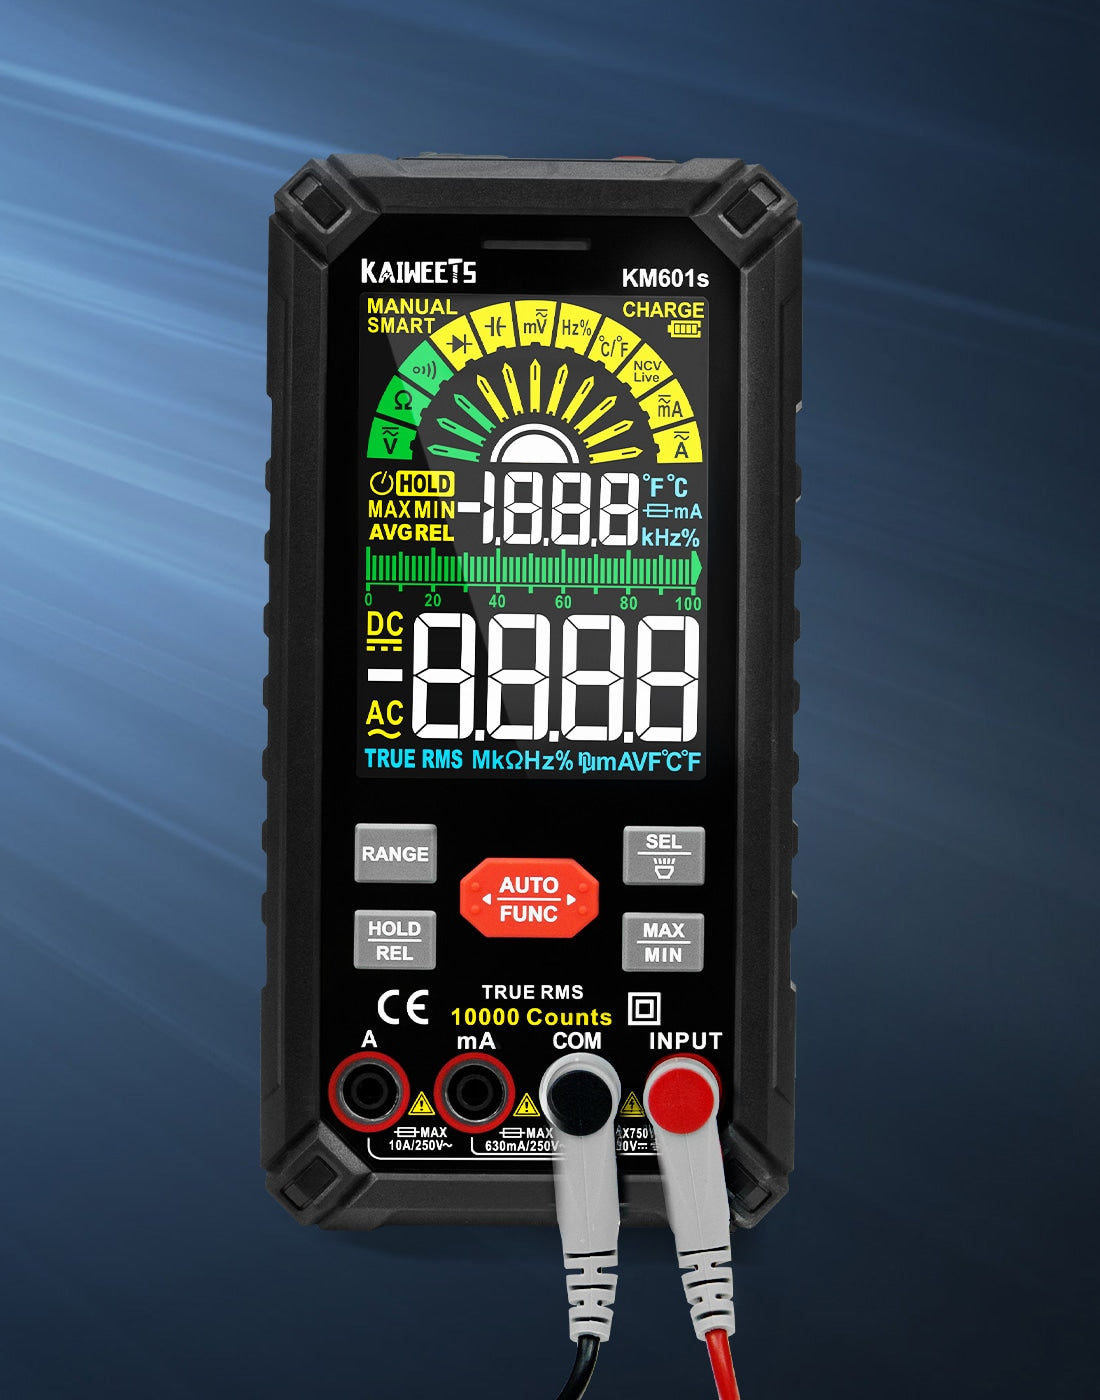 Multimètre testeur digital de 0 à 500V - 000916 - Promo-jetski